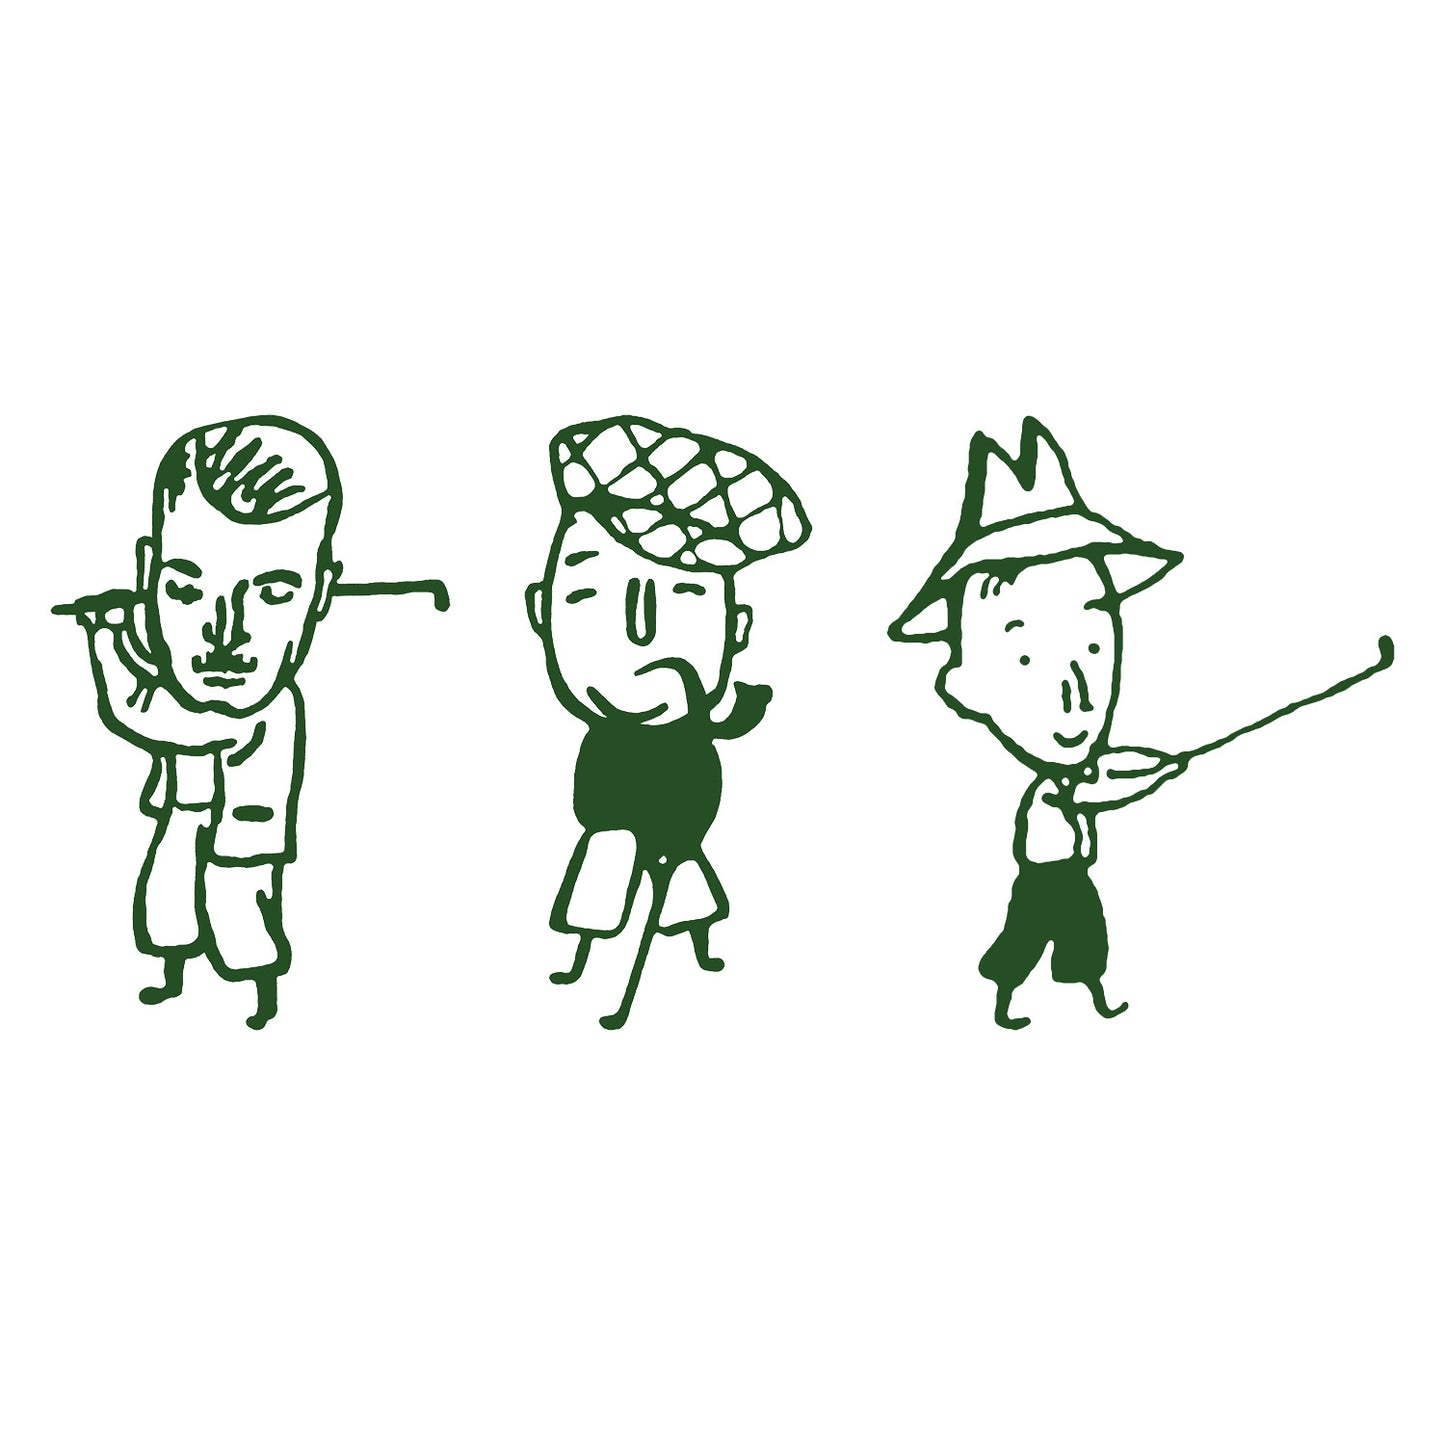 Three Golfers Enamel Mug